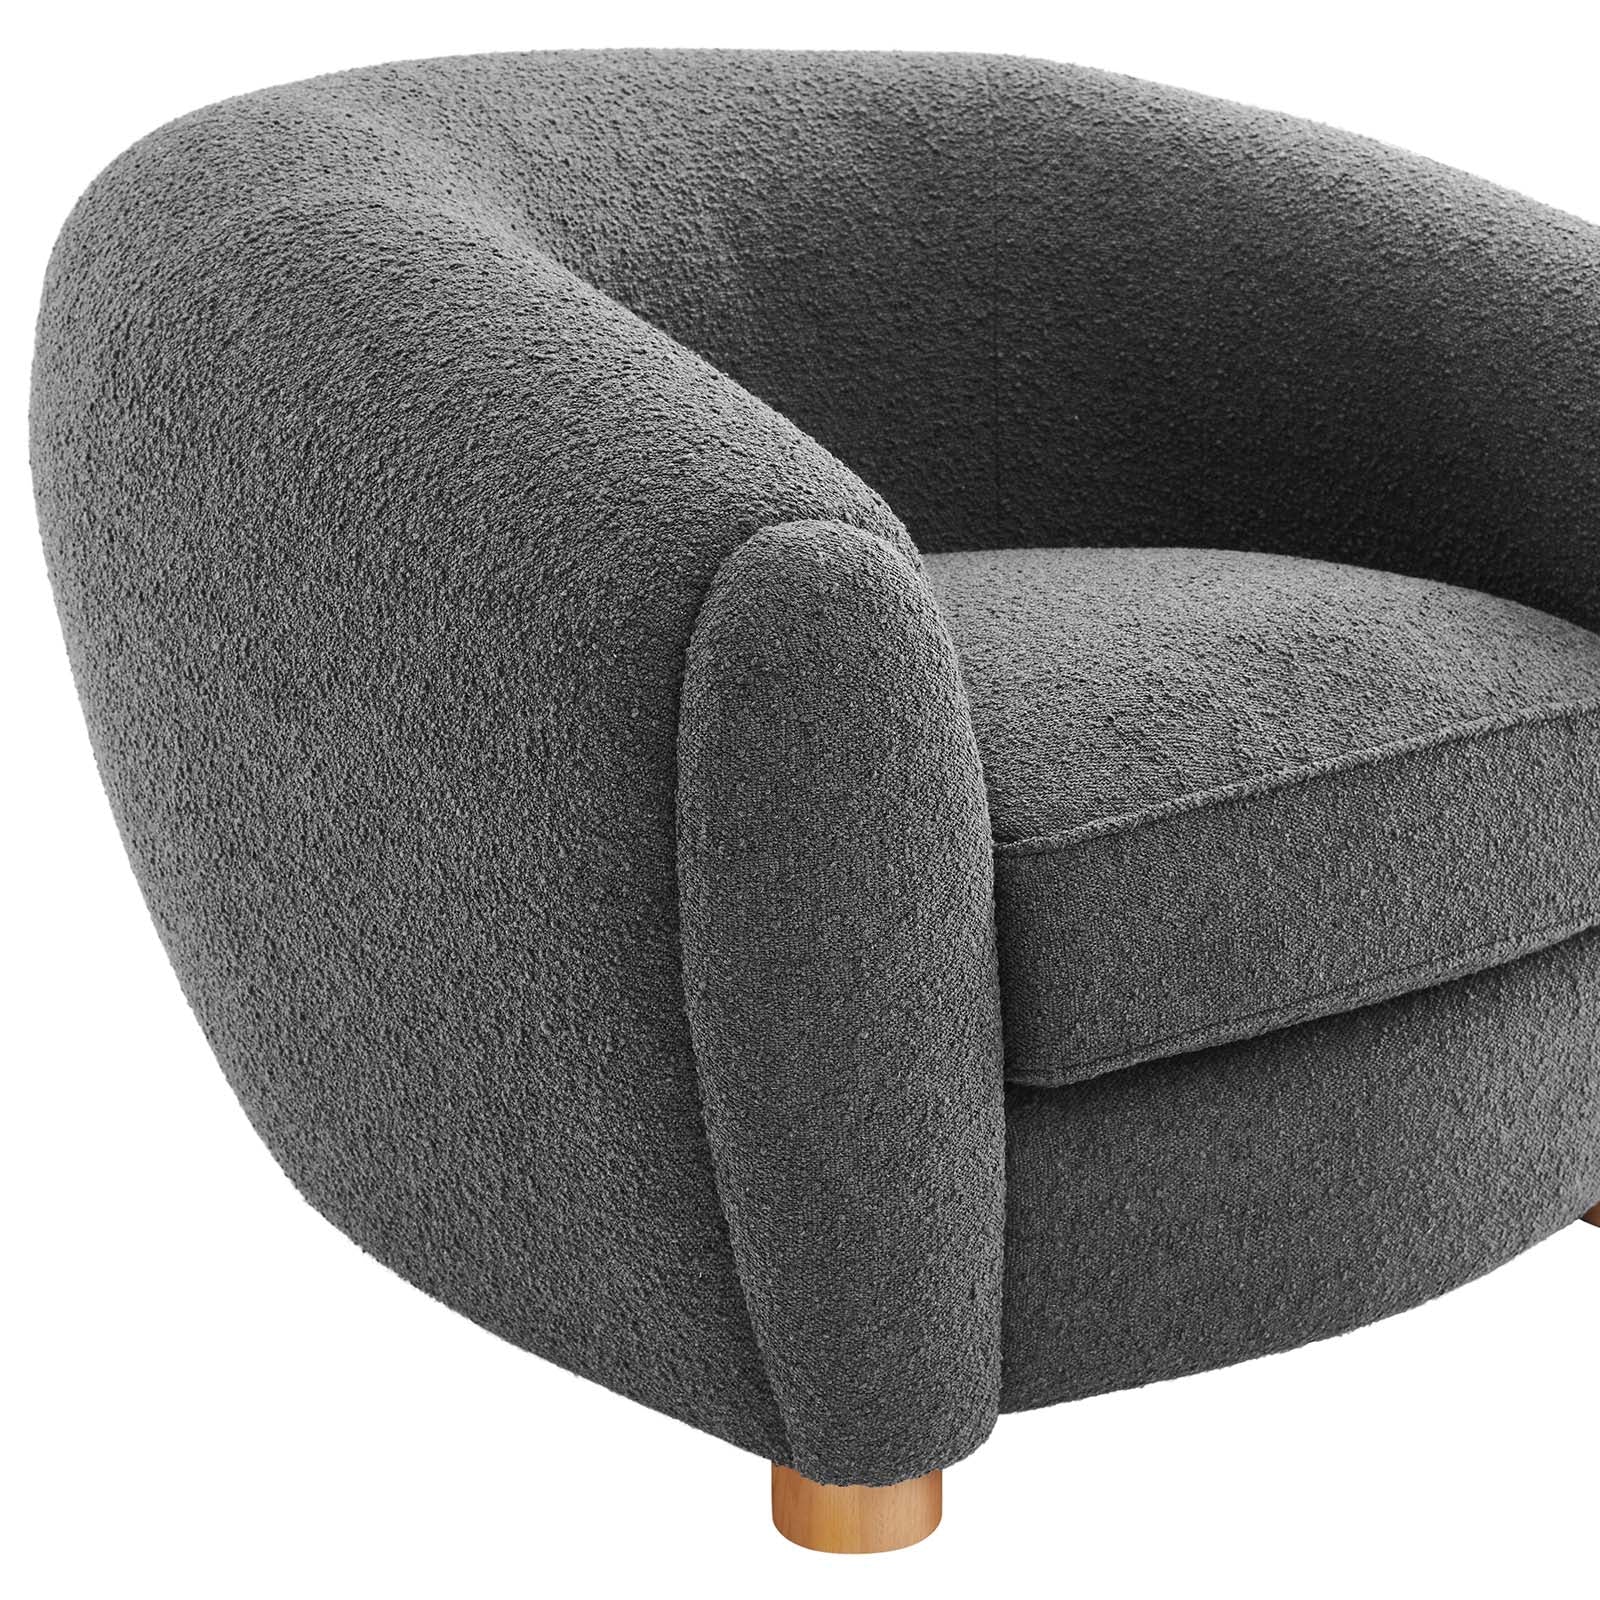 Abundant Boucle Upholstered Fabric Armchair - East Shore Modern Home Furnishings